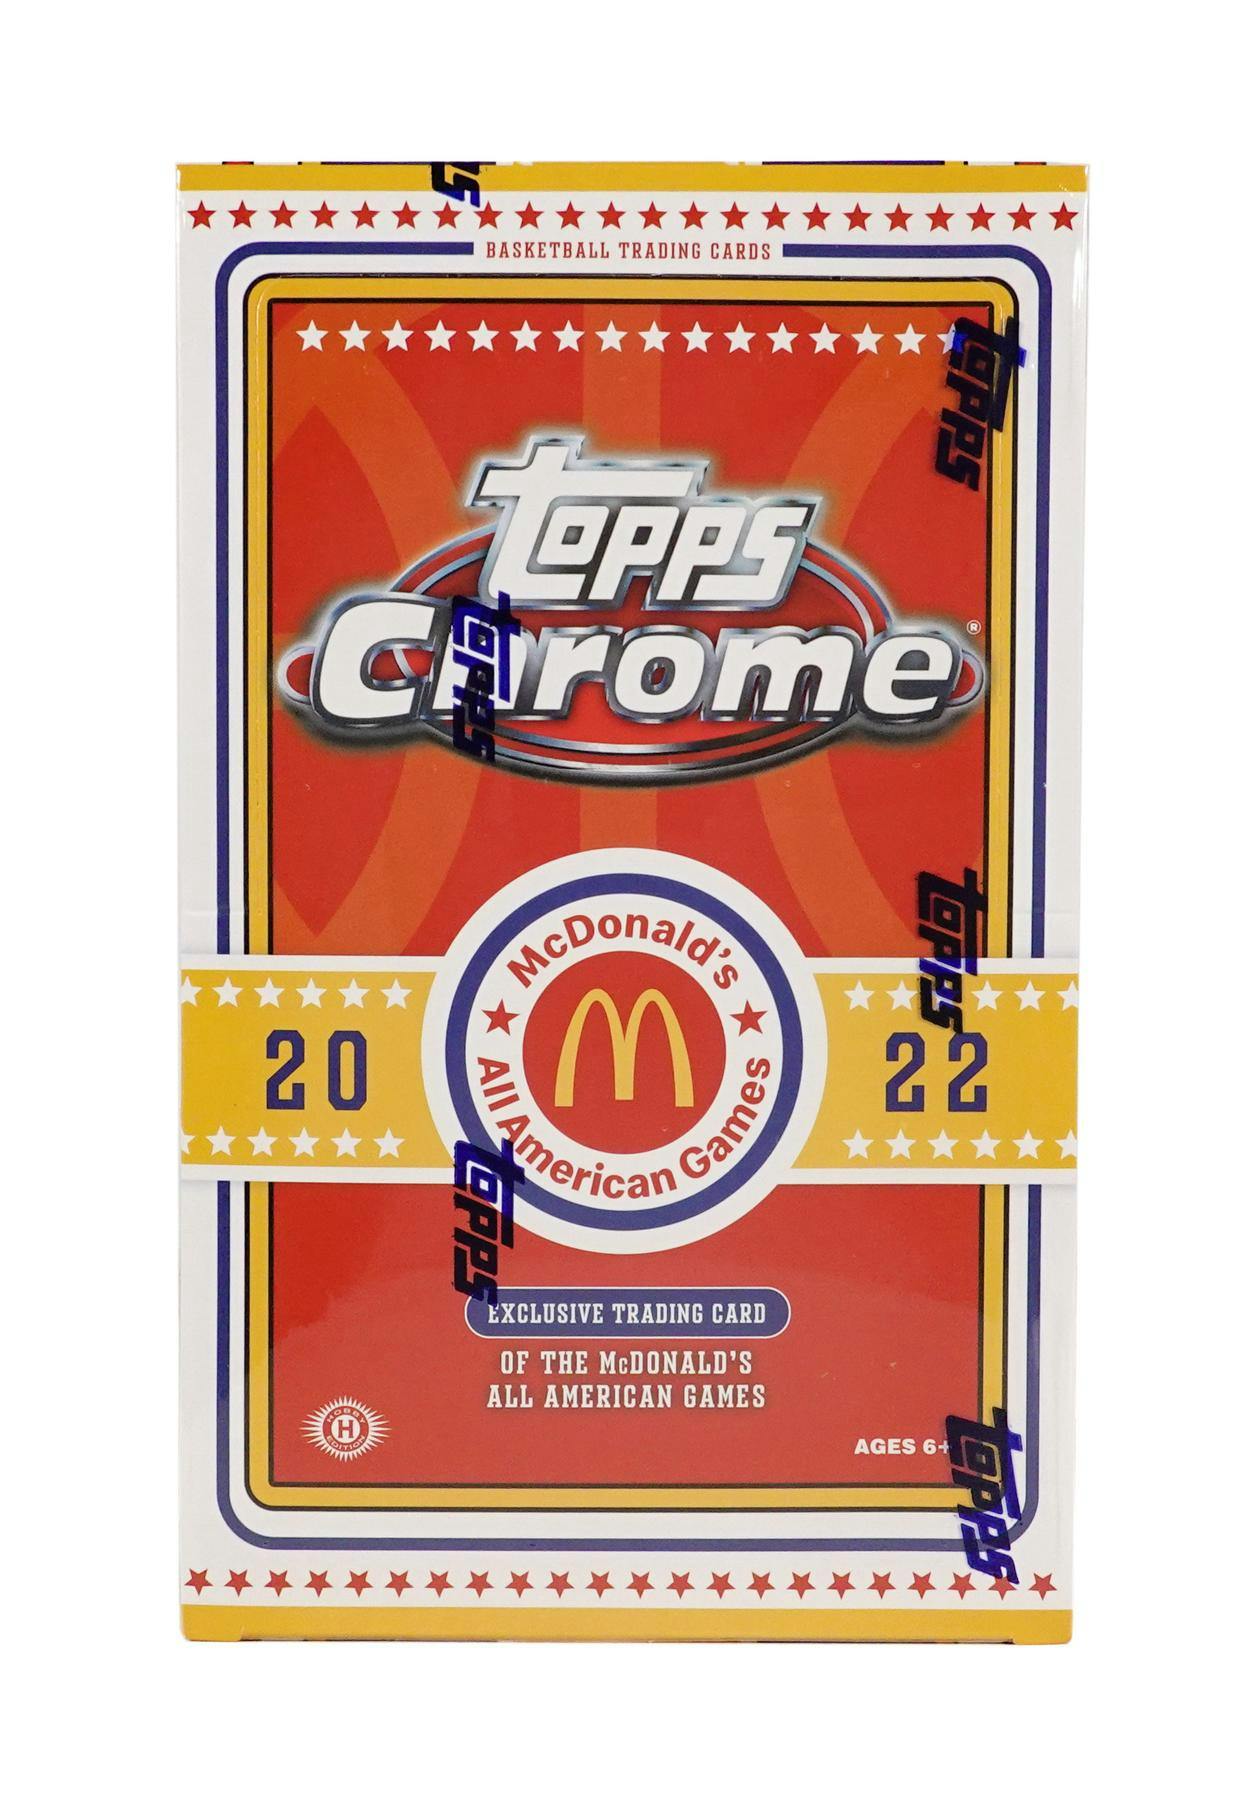 2022 Topps McDonald's All American Chrome Basketball Hobby Box -  Sports-card-zone